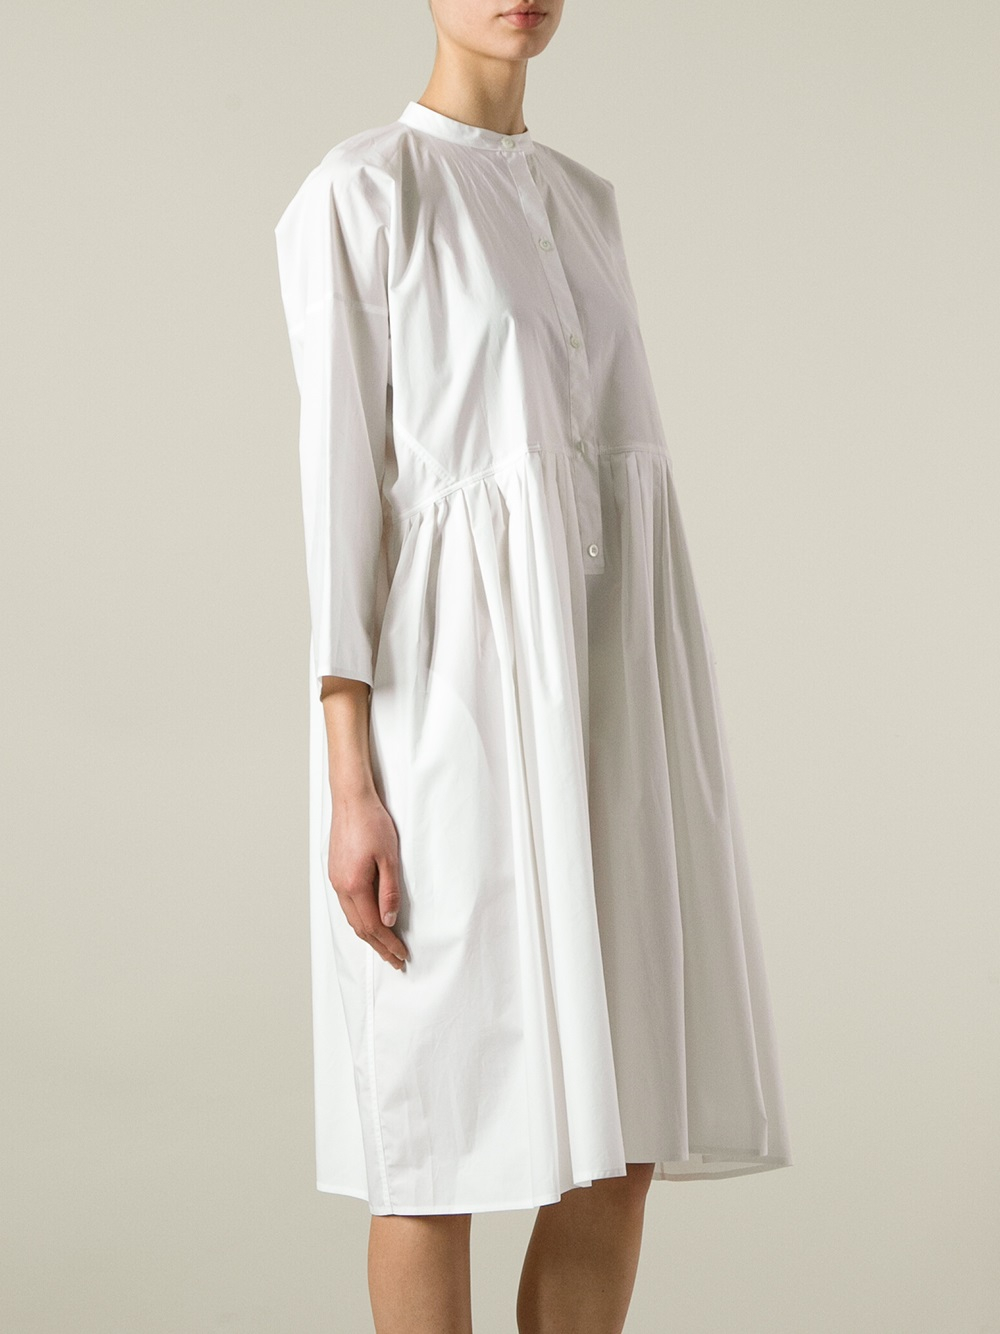 Lyst - Sofie D'Hoore `Doksy` Empire Line Dress in White